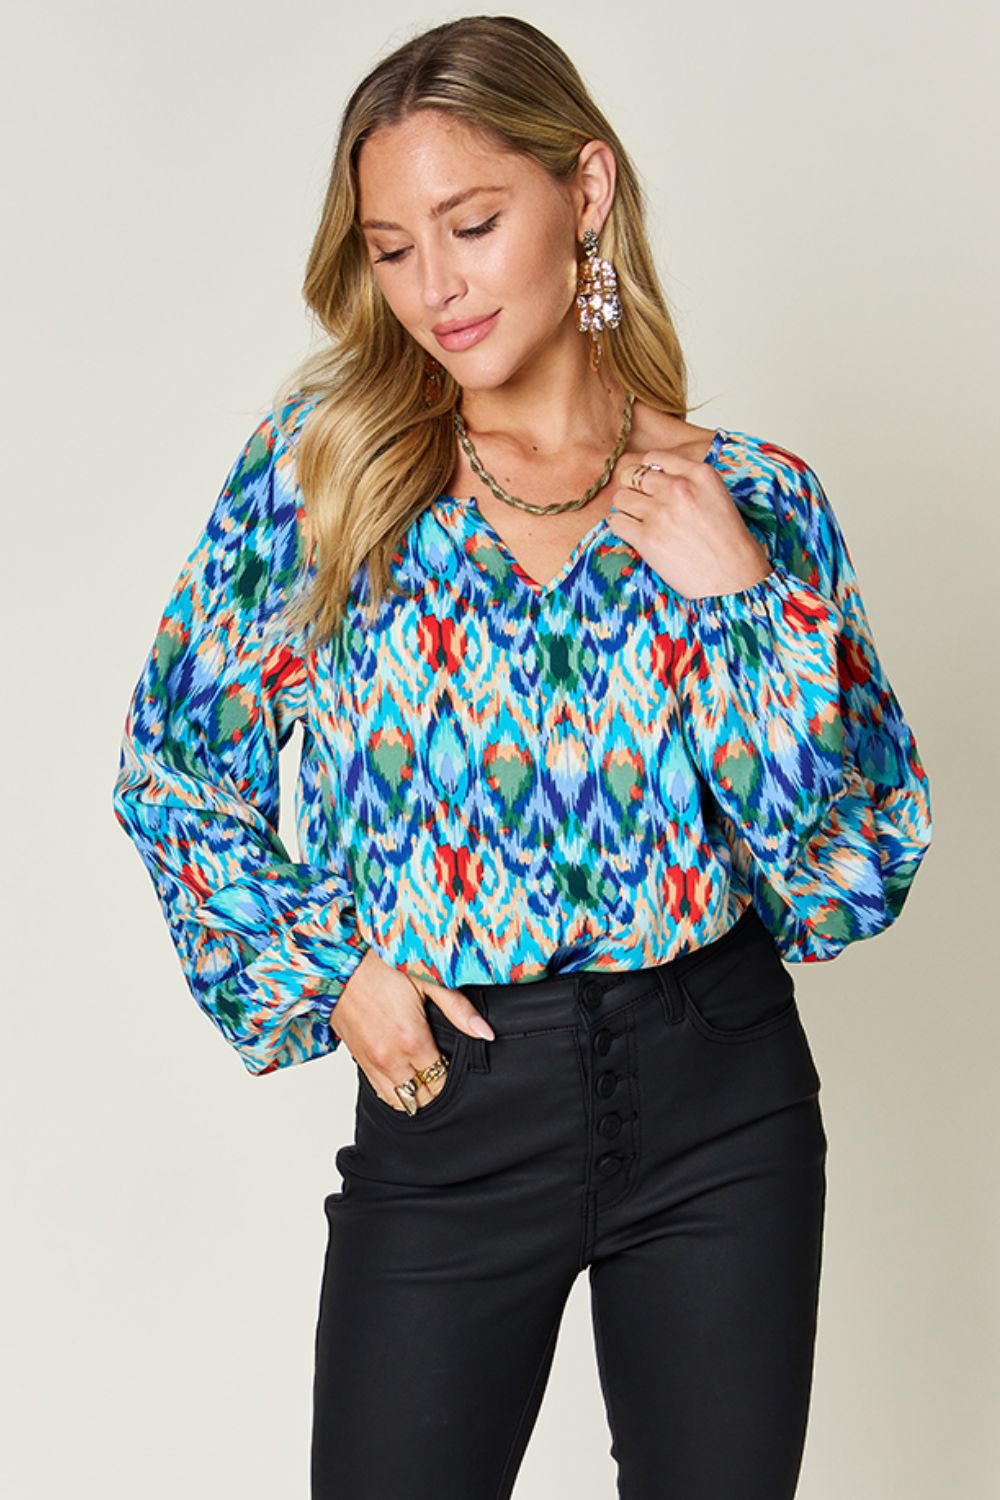 blue geometric jewel print blouse size inclusive v-neck versatile woman's top